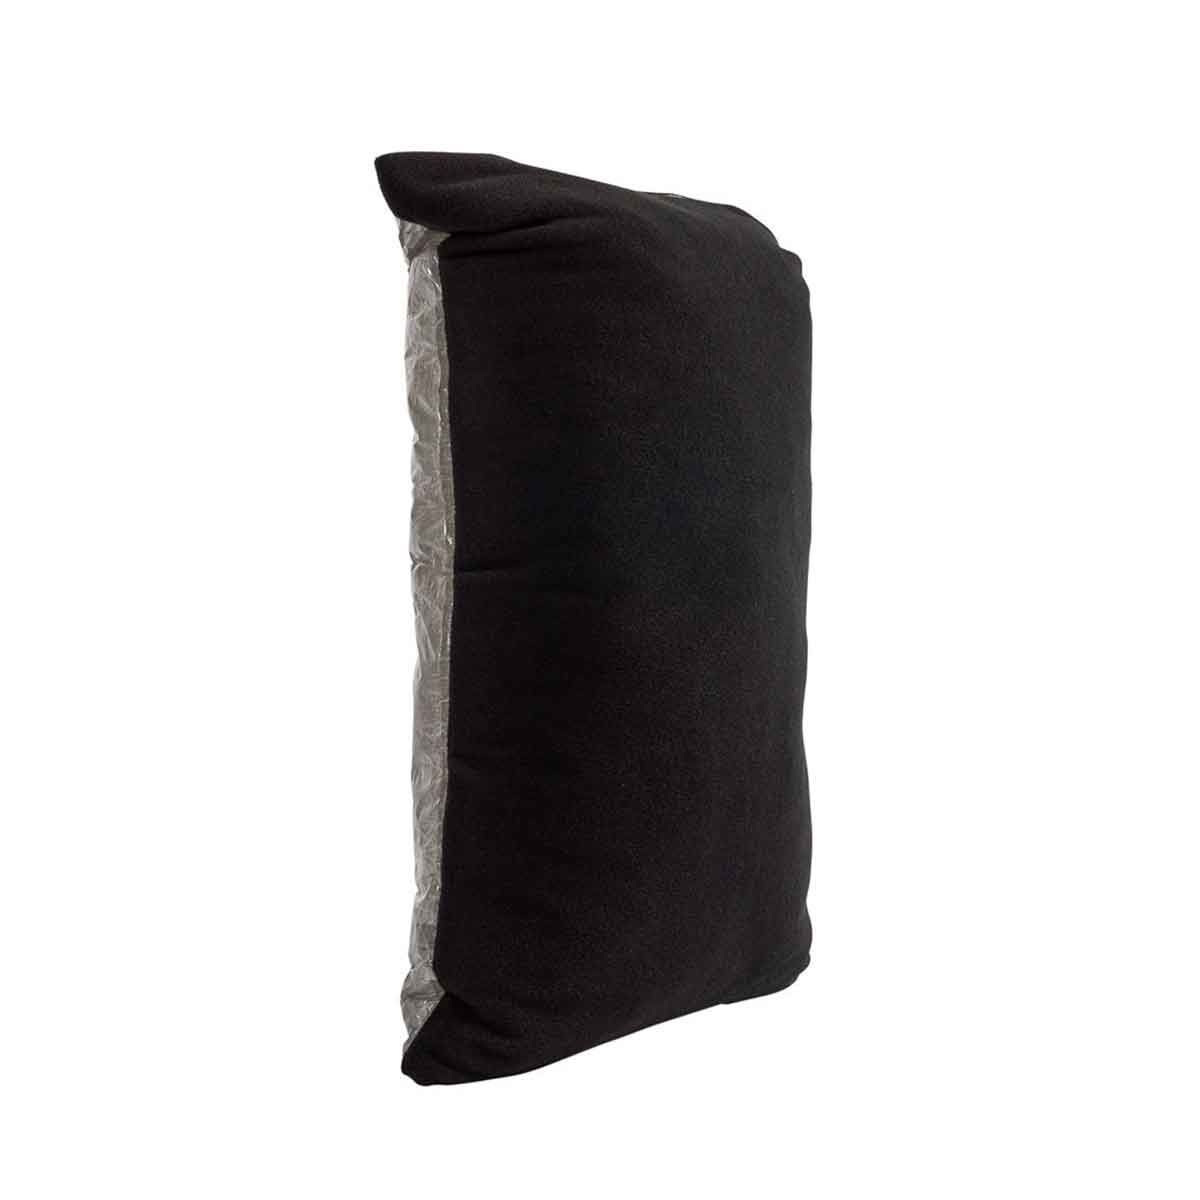 Zpacks Medium Pus pillow and drybag - 8.2L